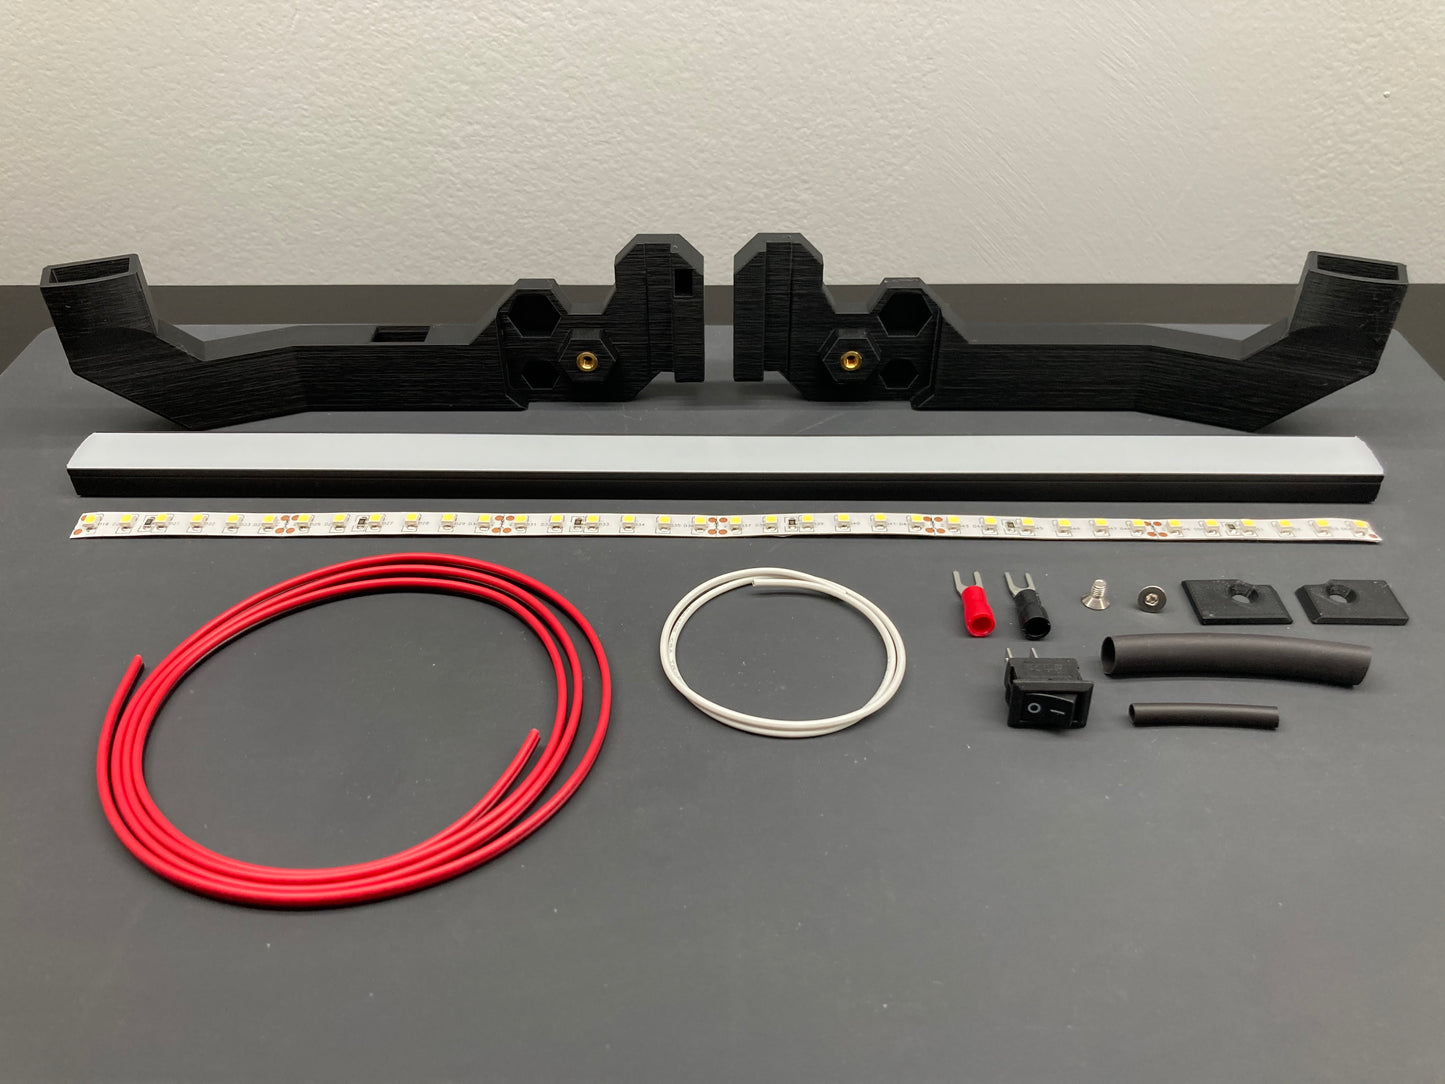 VOXEL Prusa MK3/S/+ 3D Printer LED Light Bar